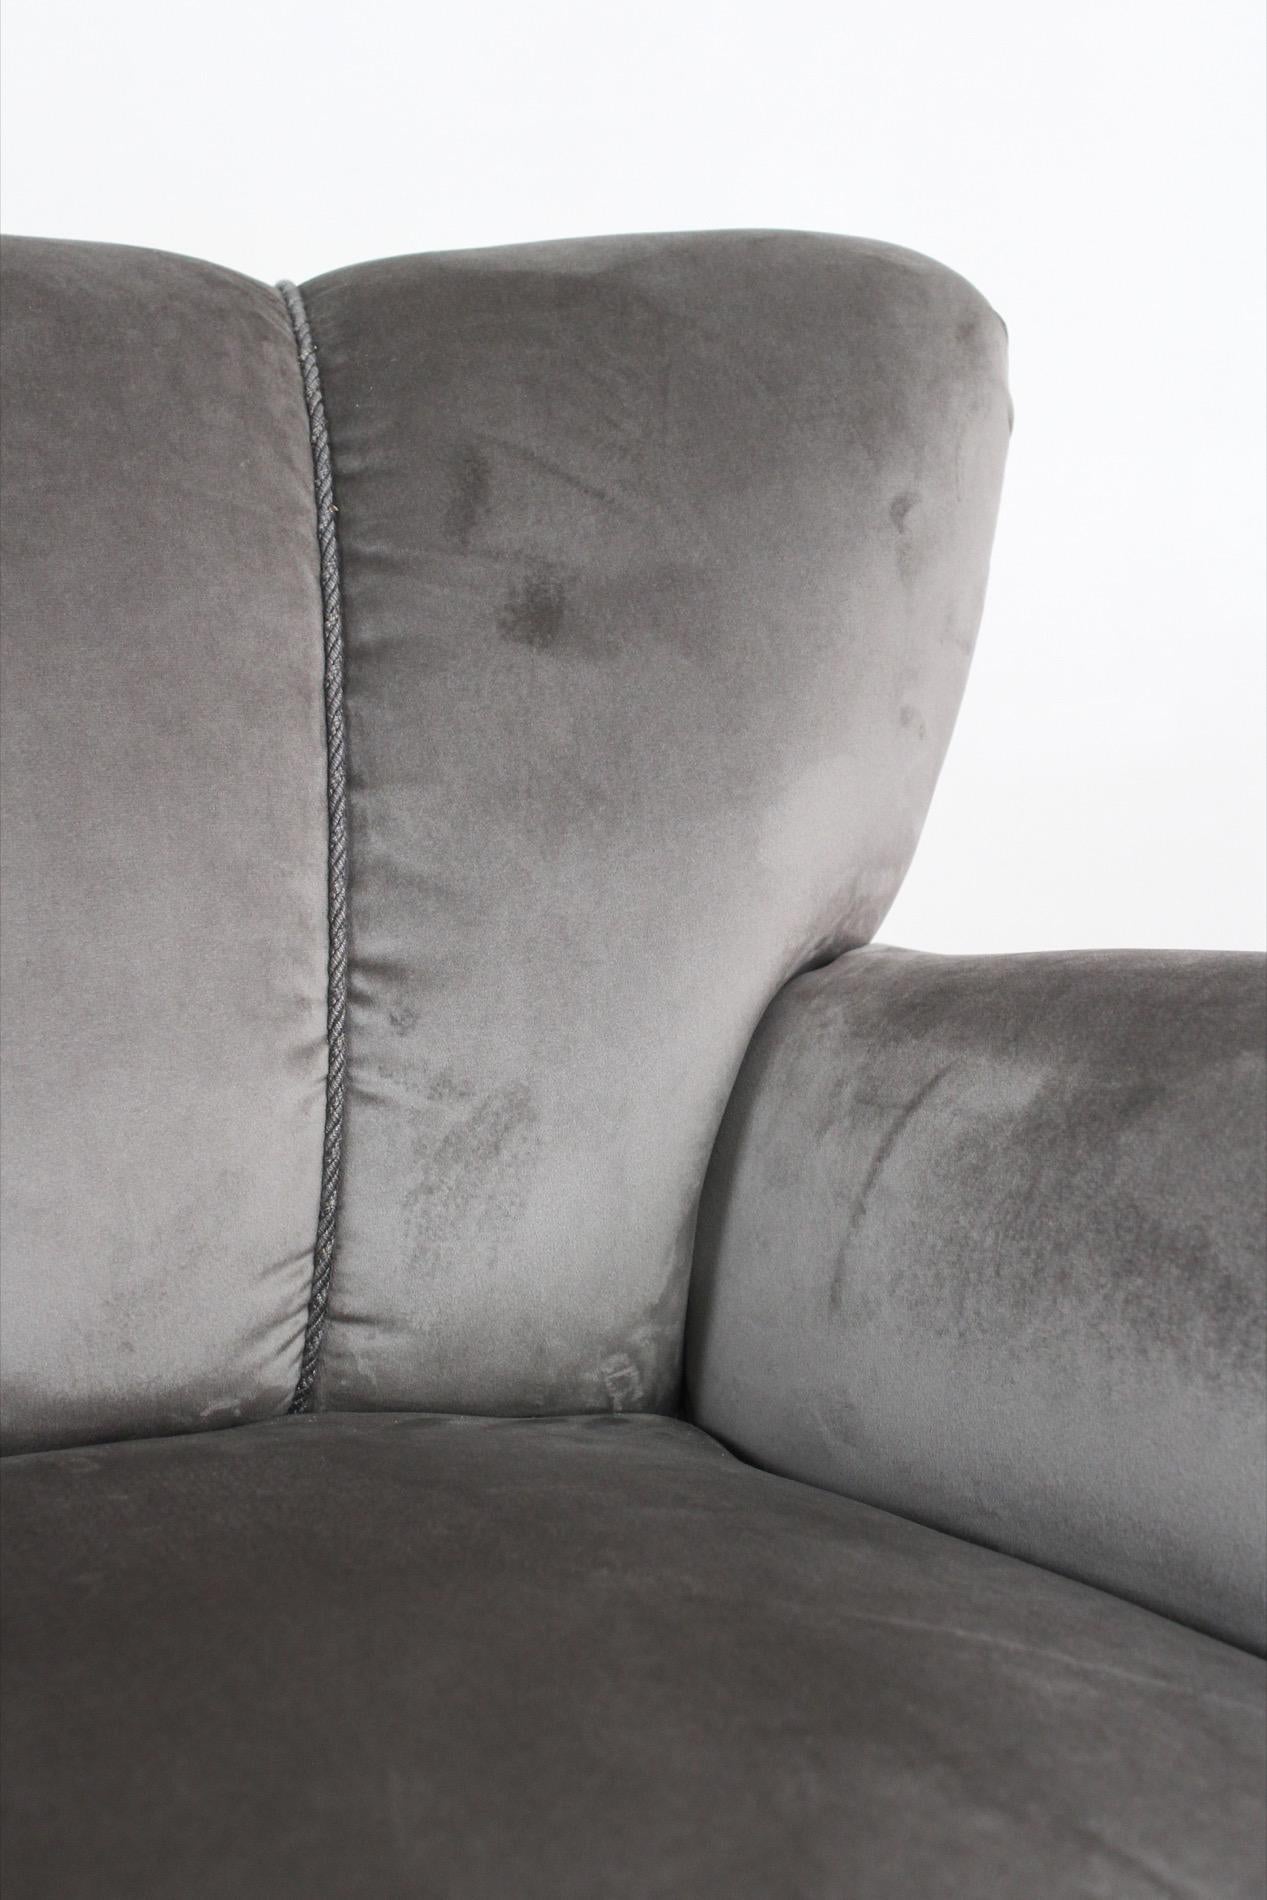 Velvet Shell Back Mid-Century Modern Armchair in the Style of Art Deco For Sale